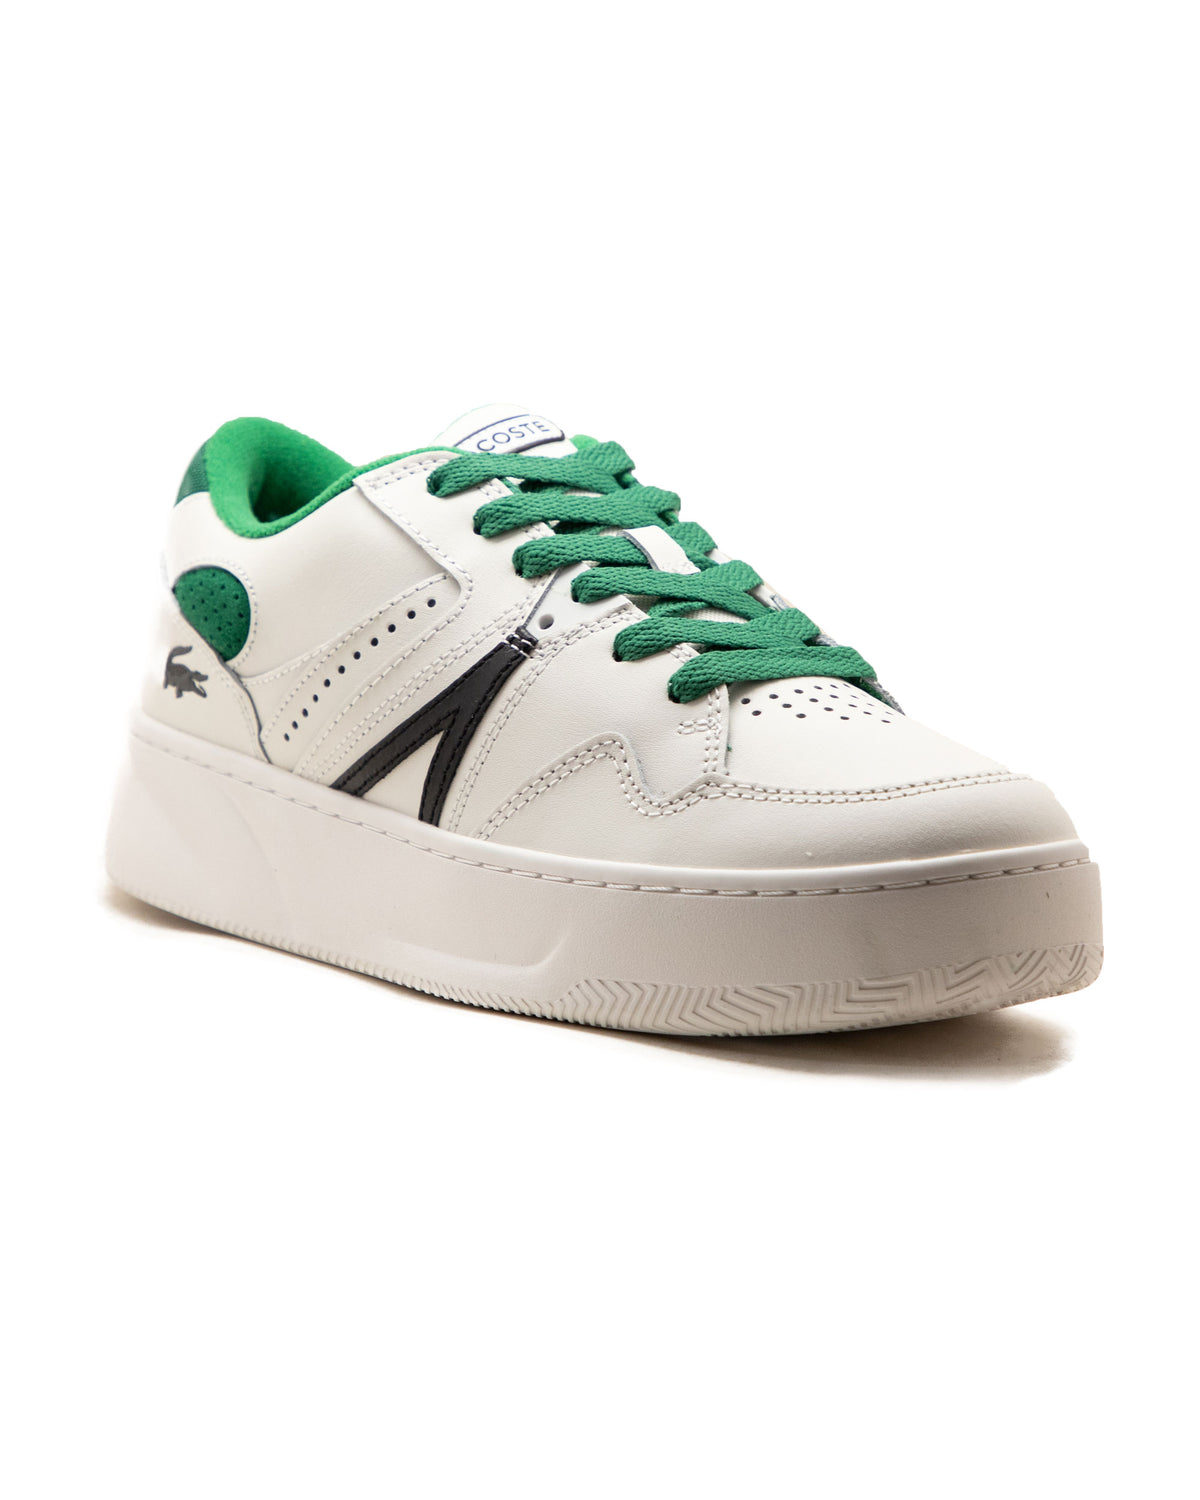 Sneakers Lacoste L005 222 SMA White Green